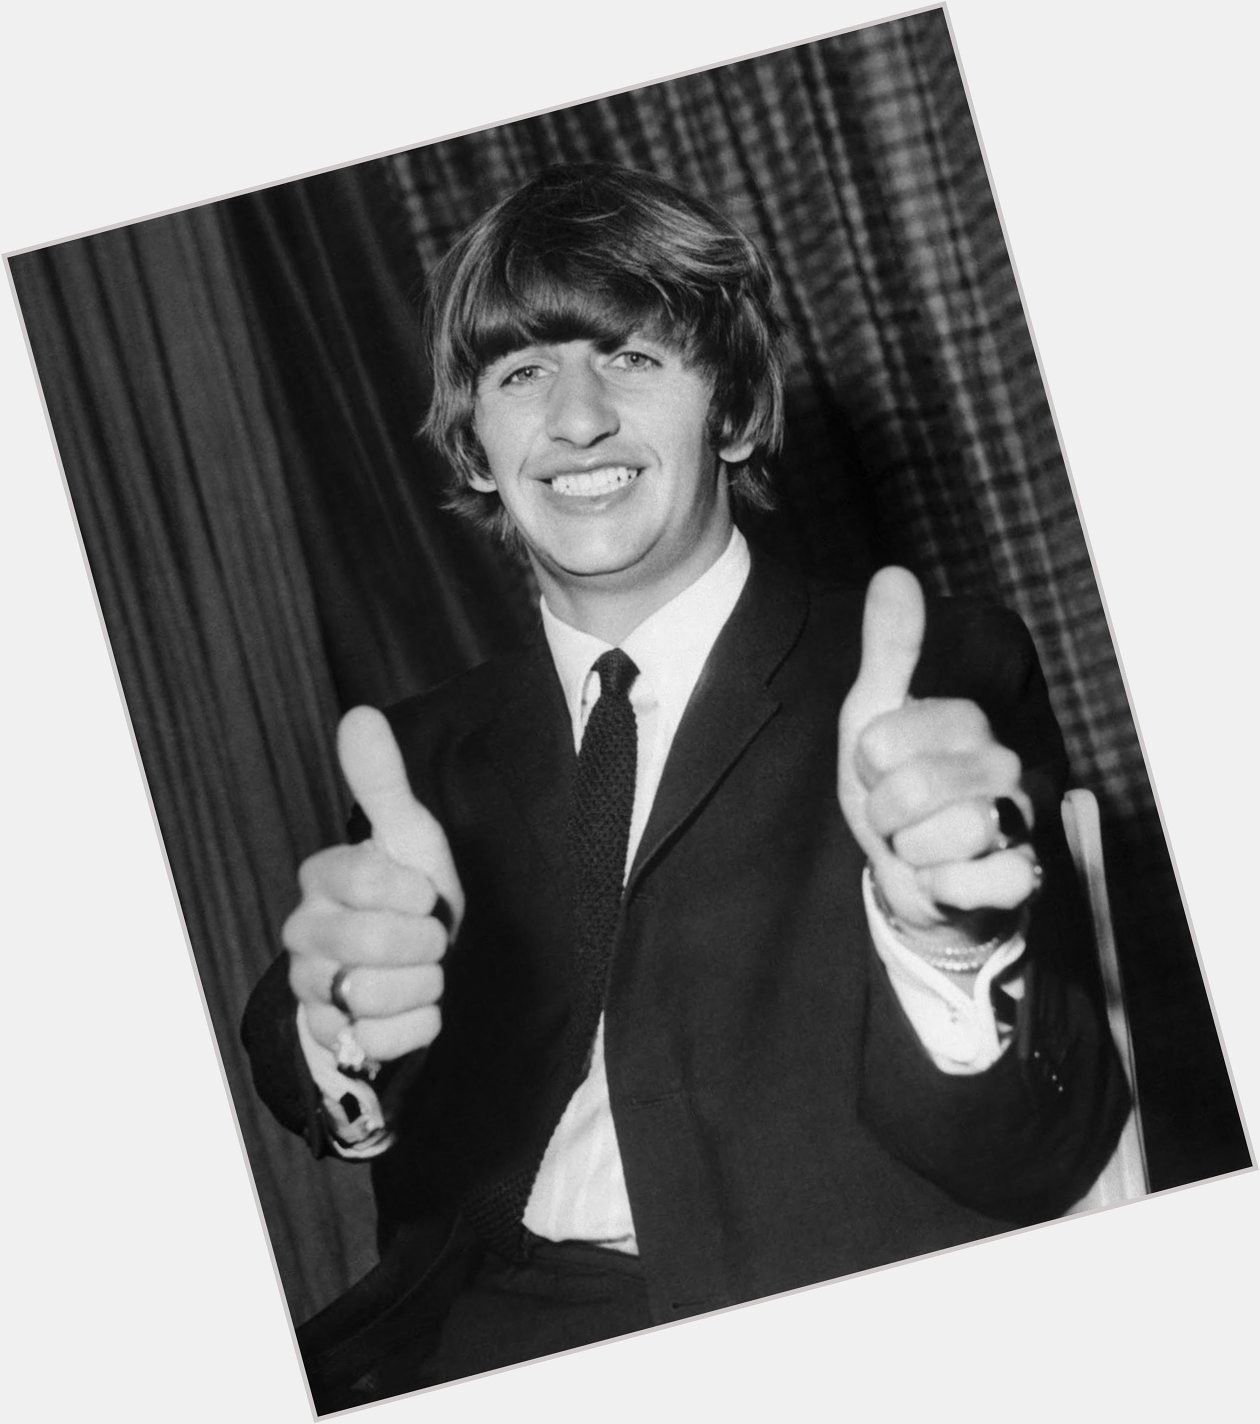 Happy 78th birthday to Ringo Starr! 